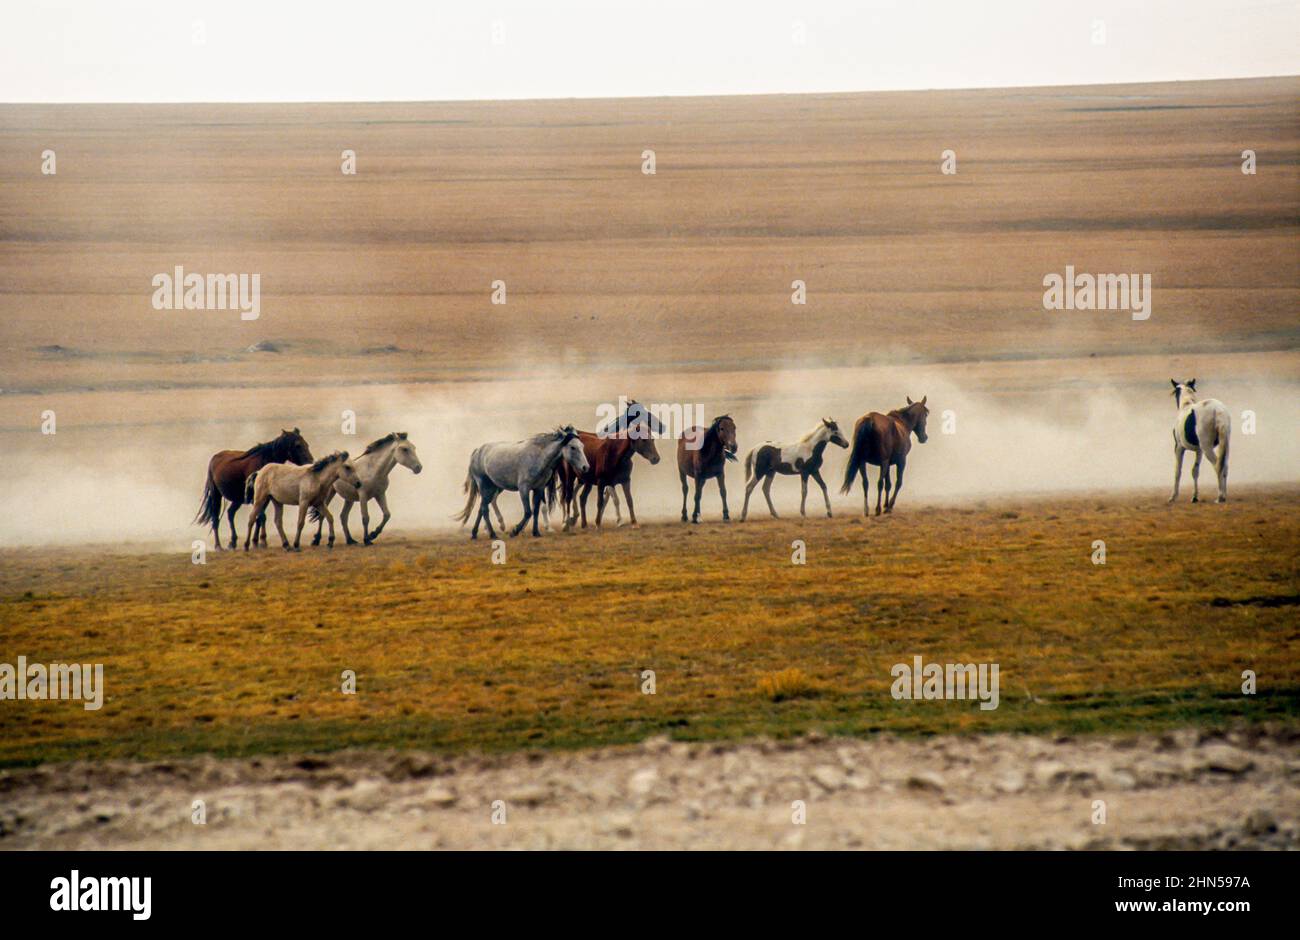 A herd of Horses running in Kyrgyzstan Stock Photo